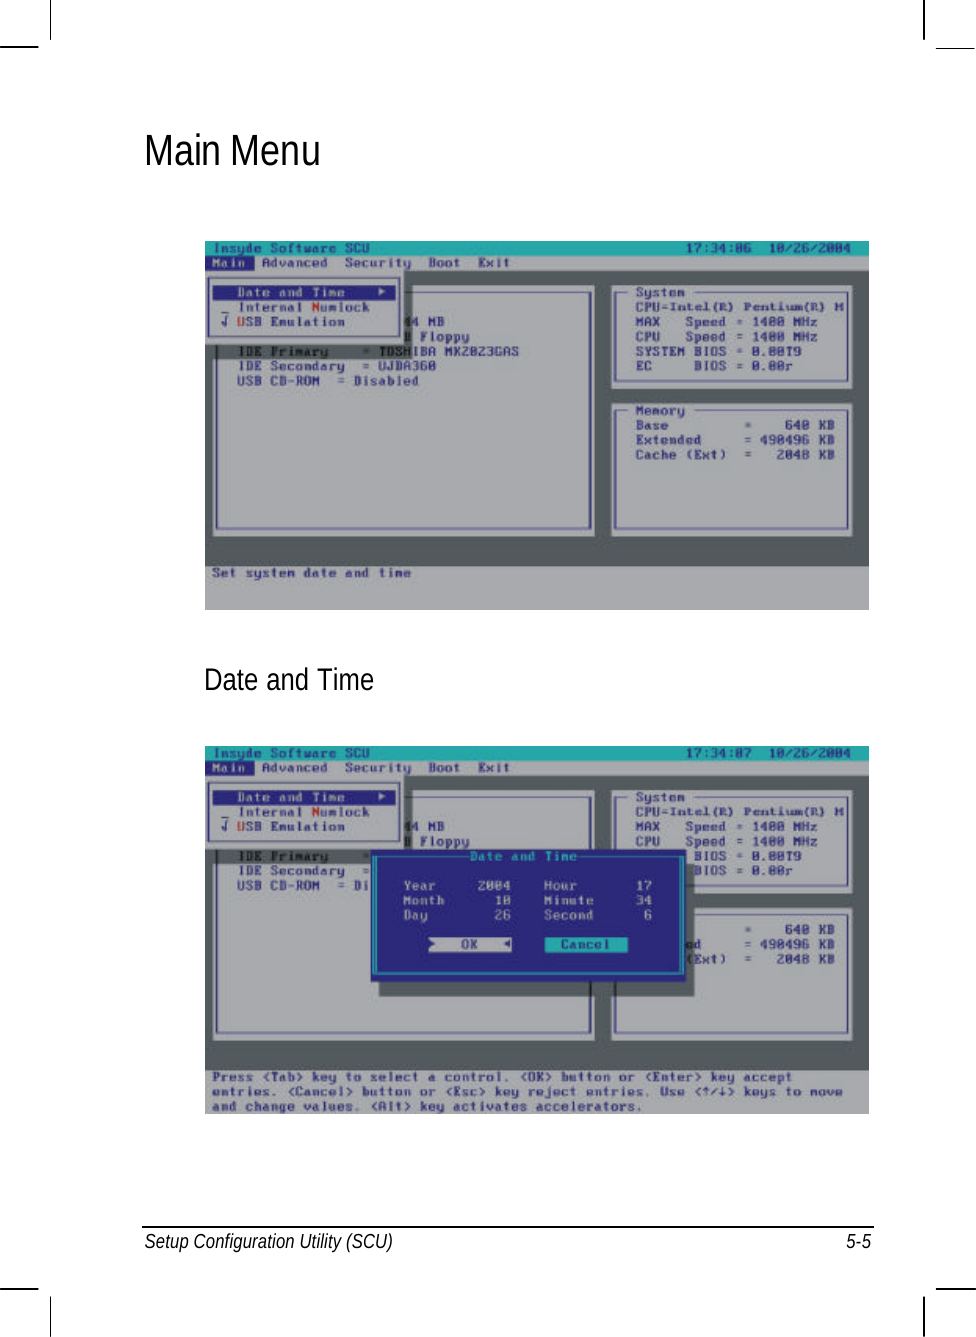  Setup Configuration Utility (SCU) 5-5 Main Menu  Date and Time  